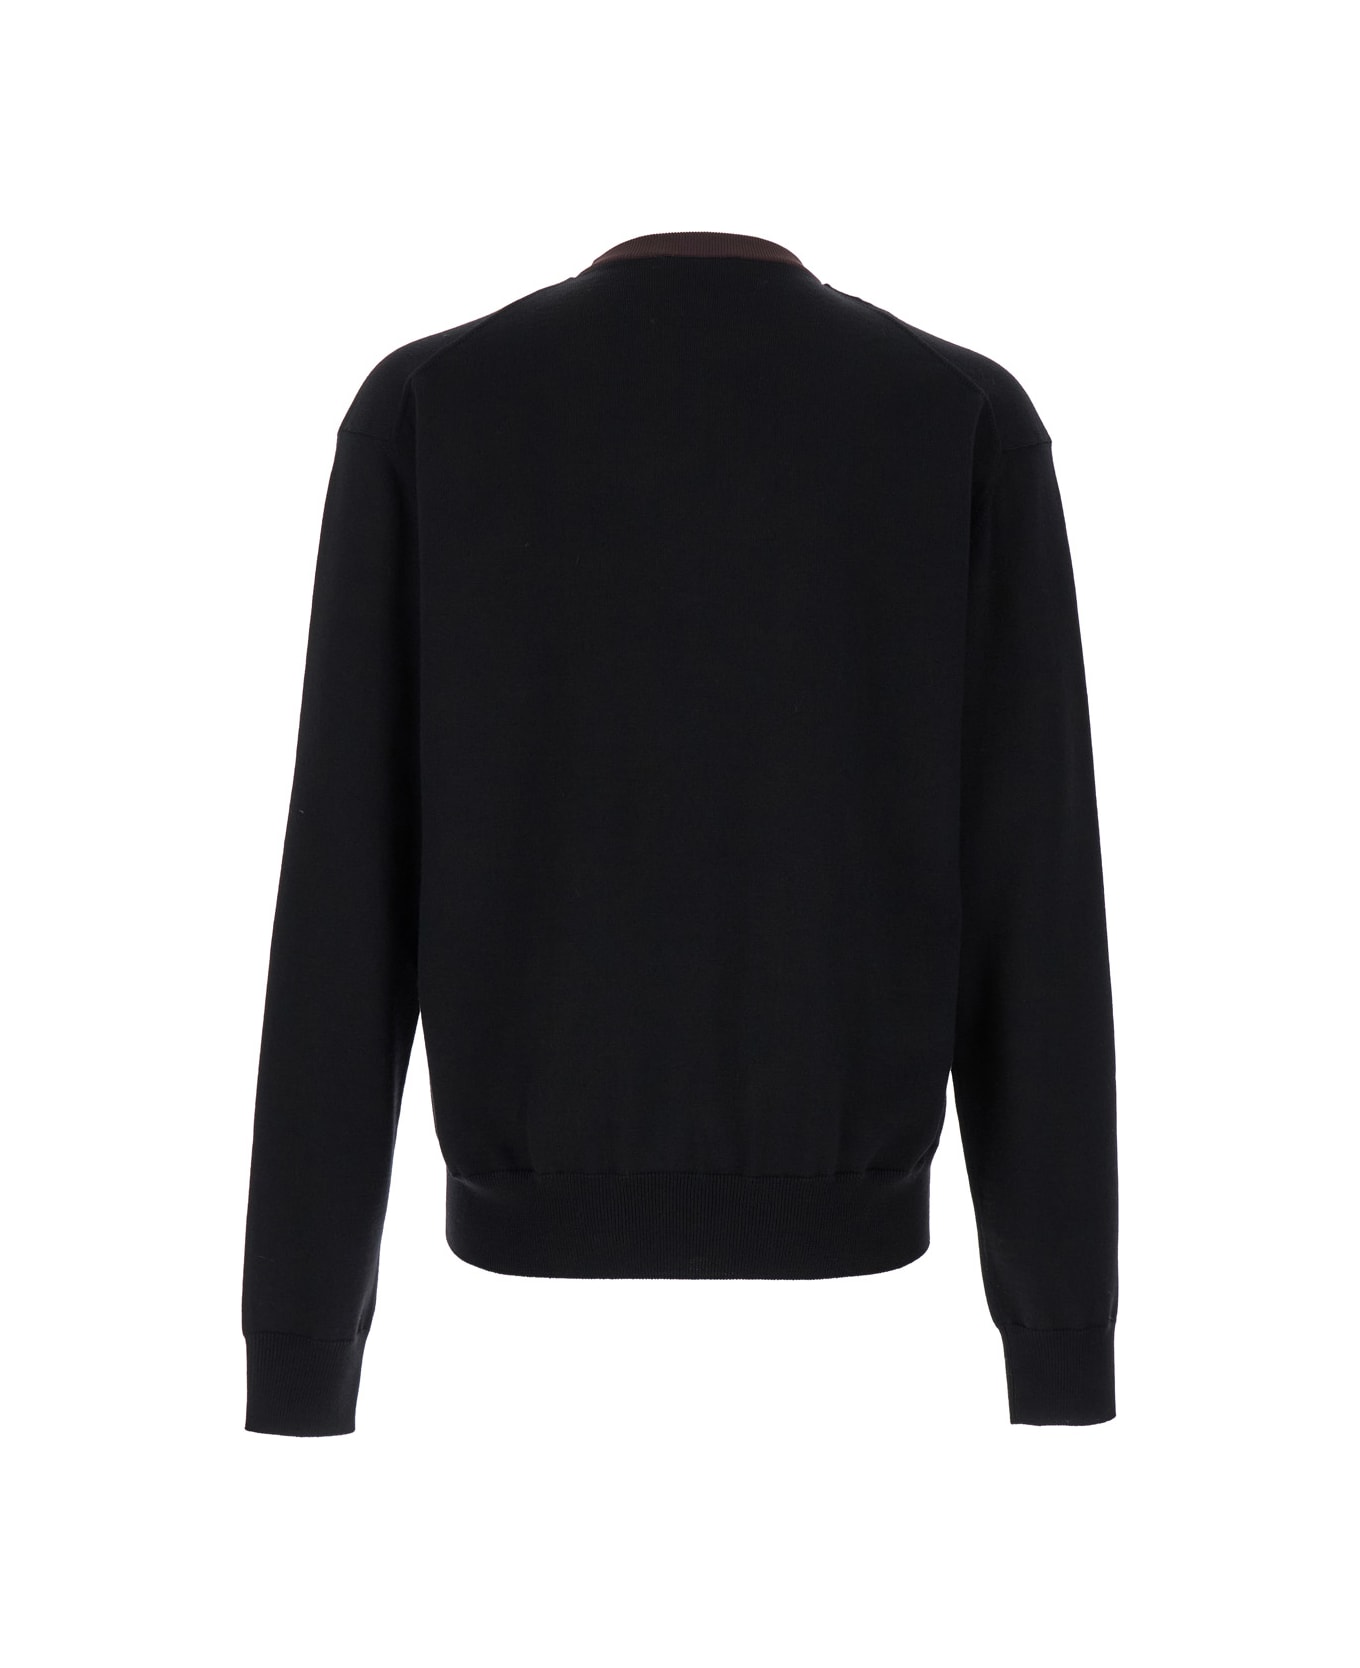 Jil Sander Black And Brown Double-neck Sweater In Wool Man - Black ニットウェア